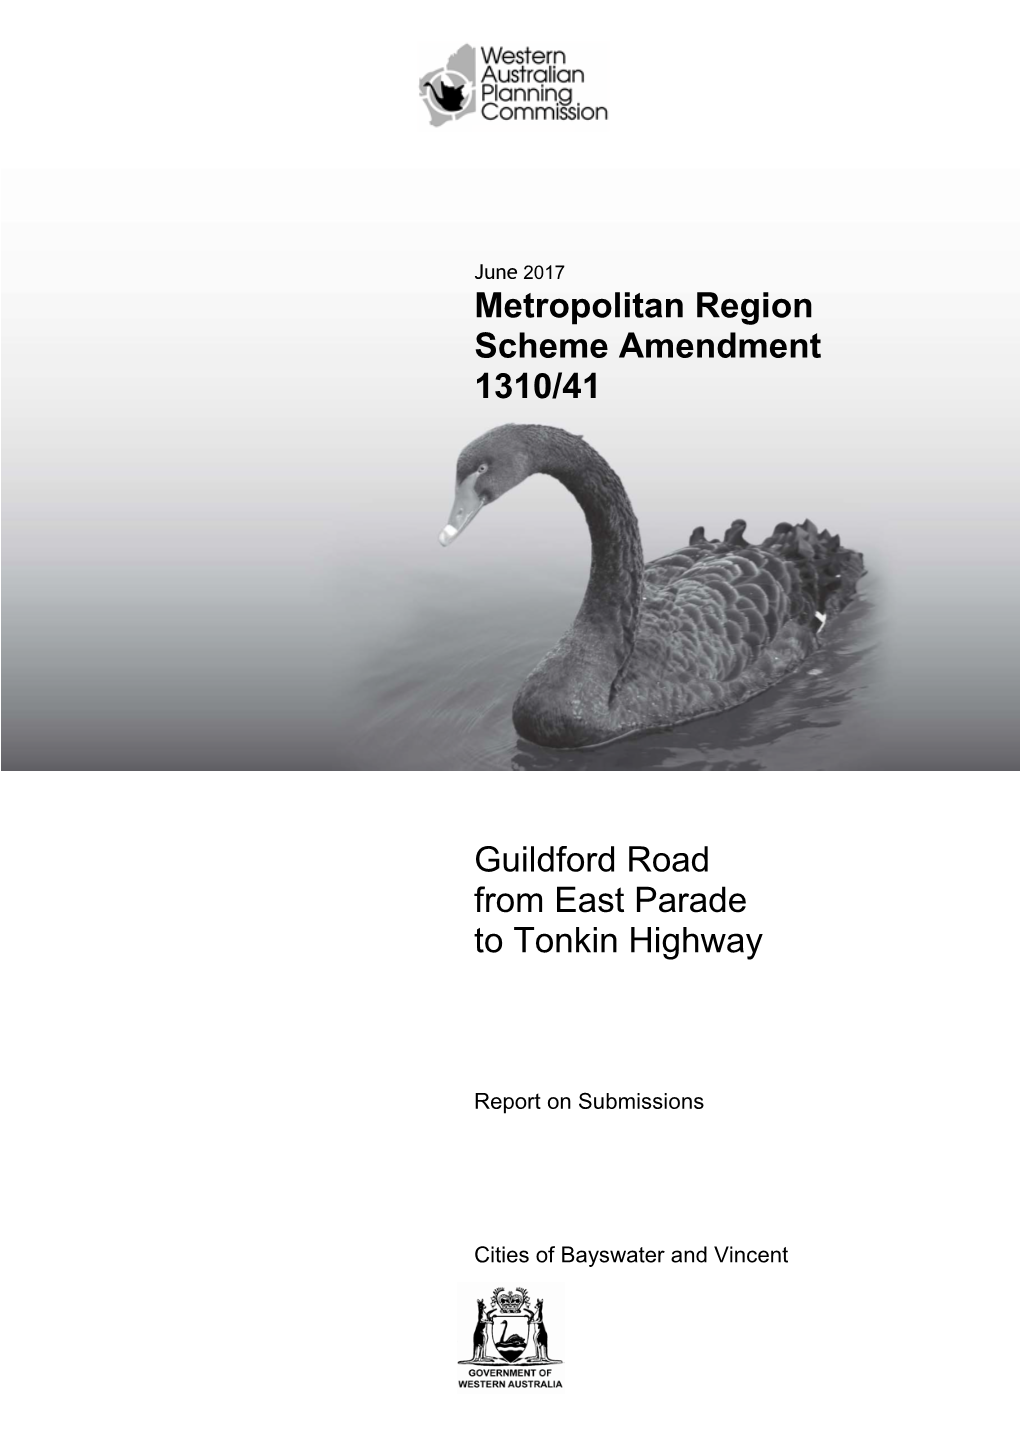 Metropolitan Region Scheme Major Amendment 1310/41